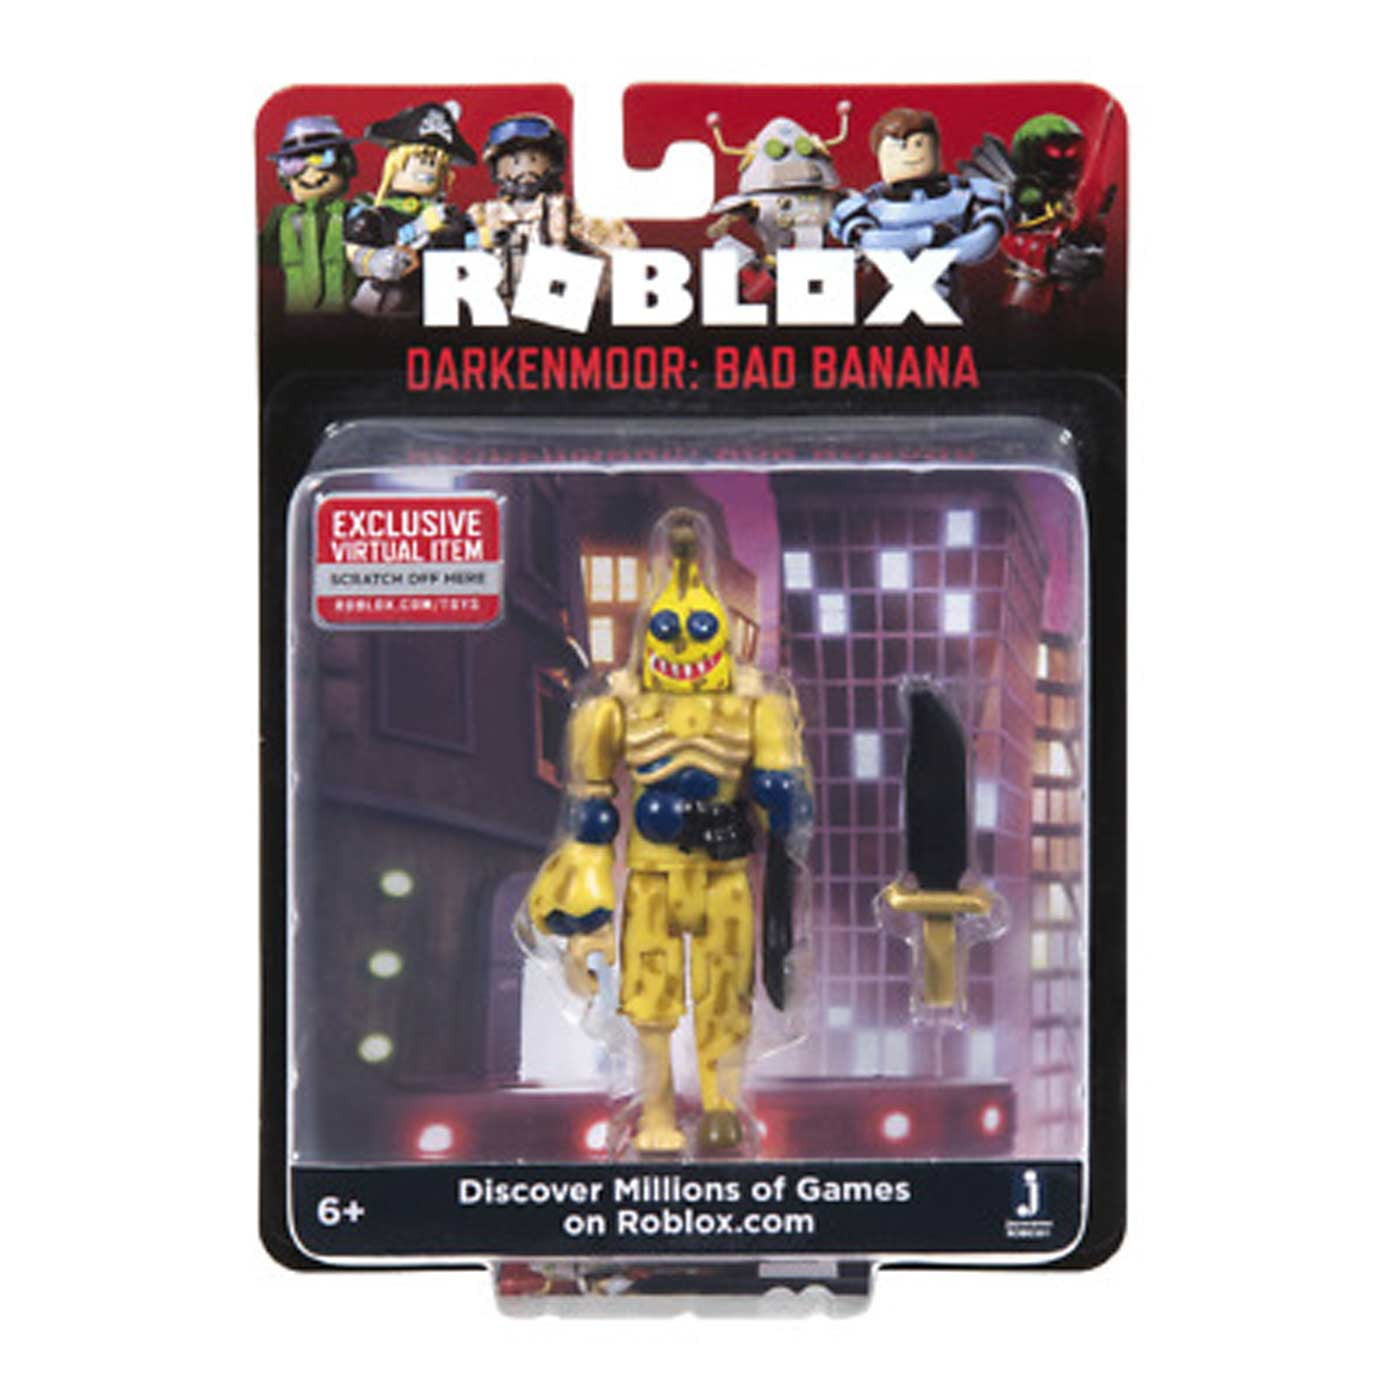 Roblox Action Collection Darkenmoor Bad Banana Figure Pack Includes Exclusive Virtual Item Walmart Com Walmart Com - tv movie video games 4 pack new action figures roblox